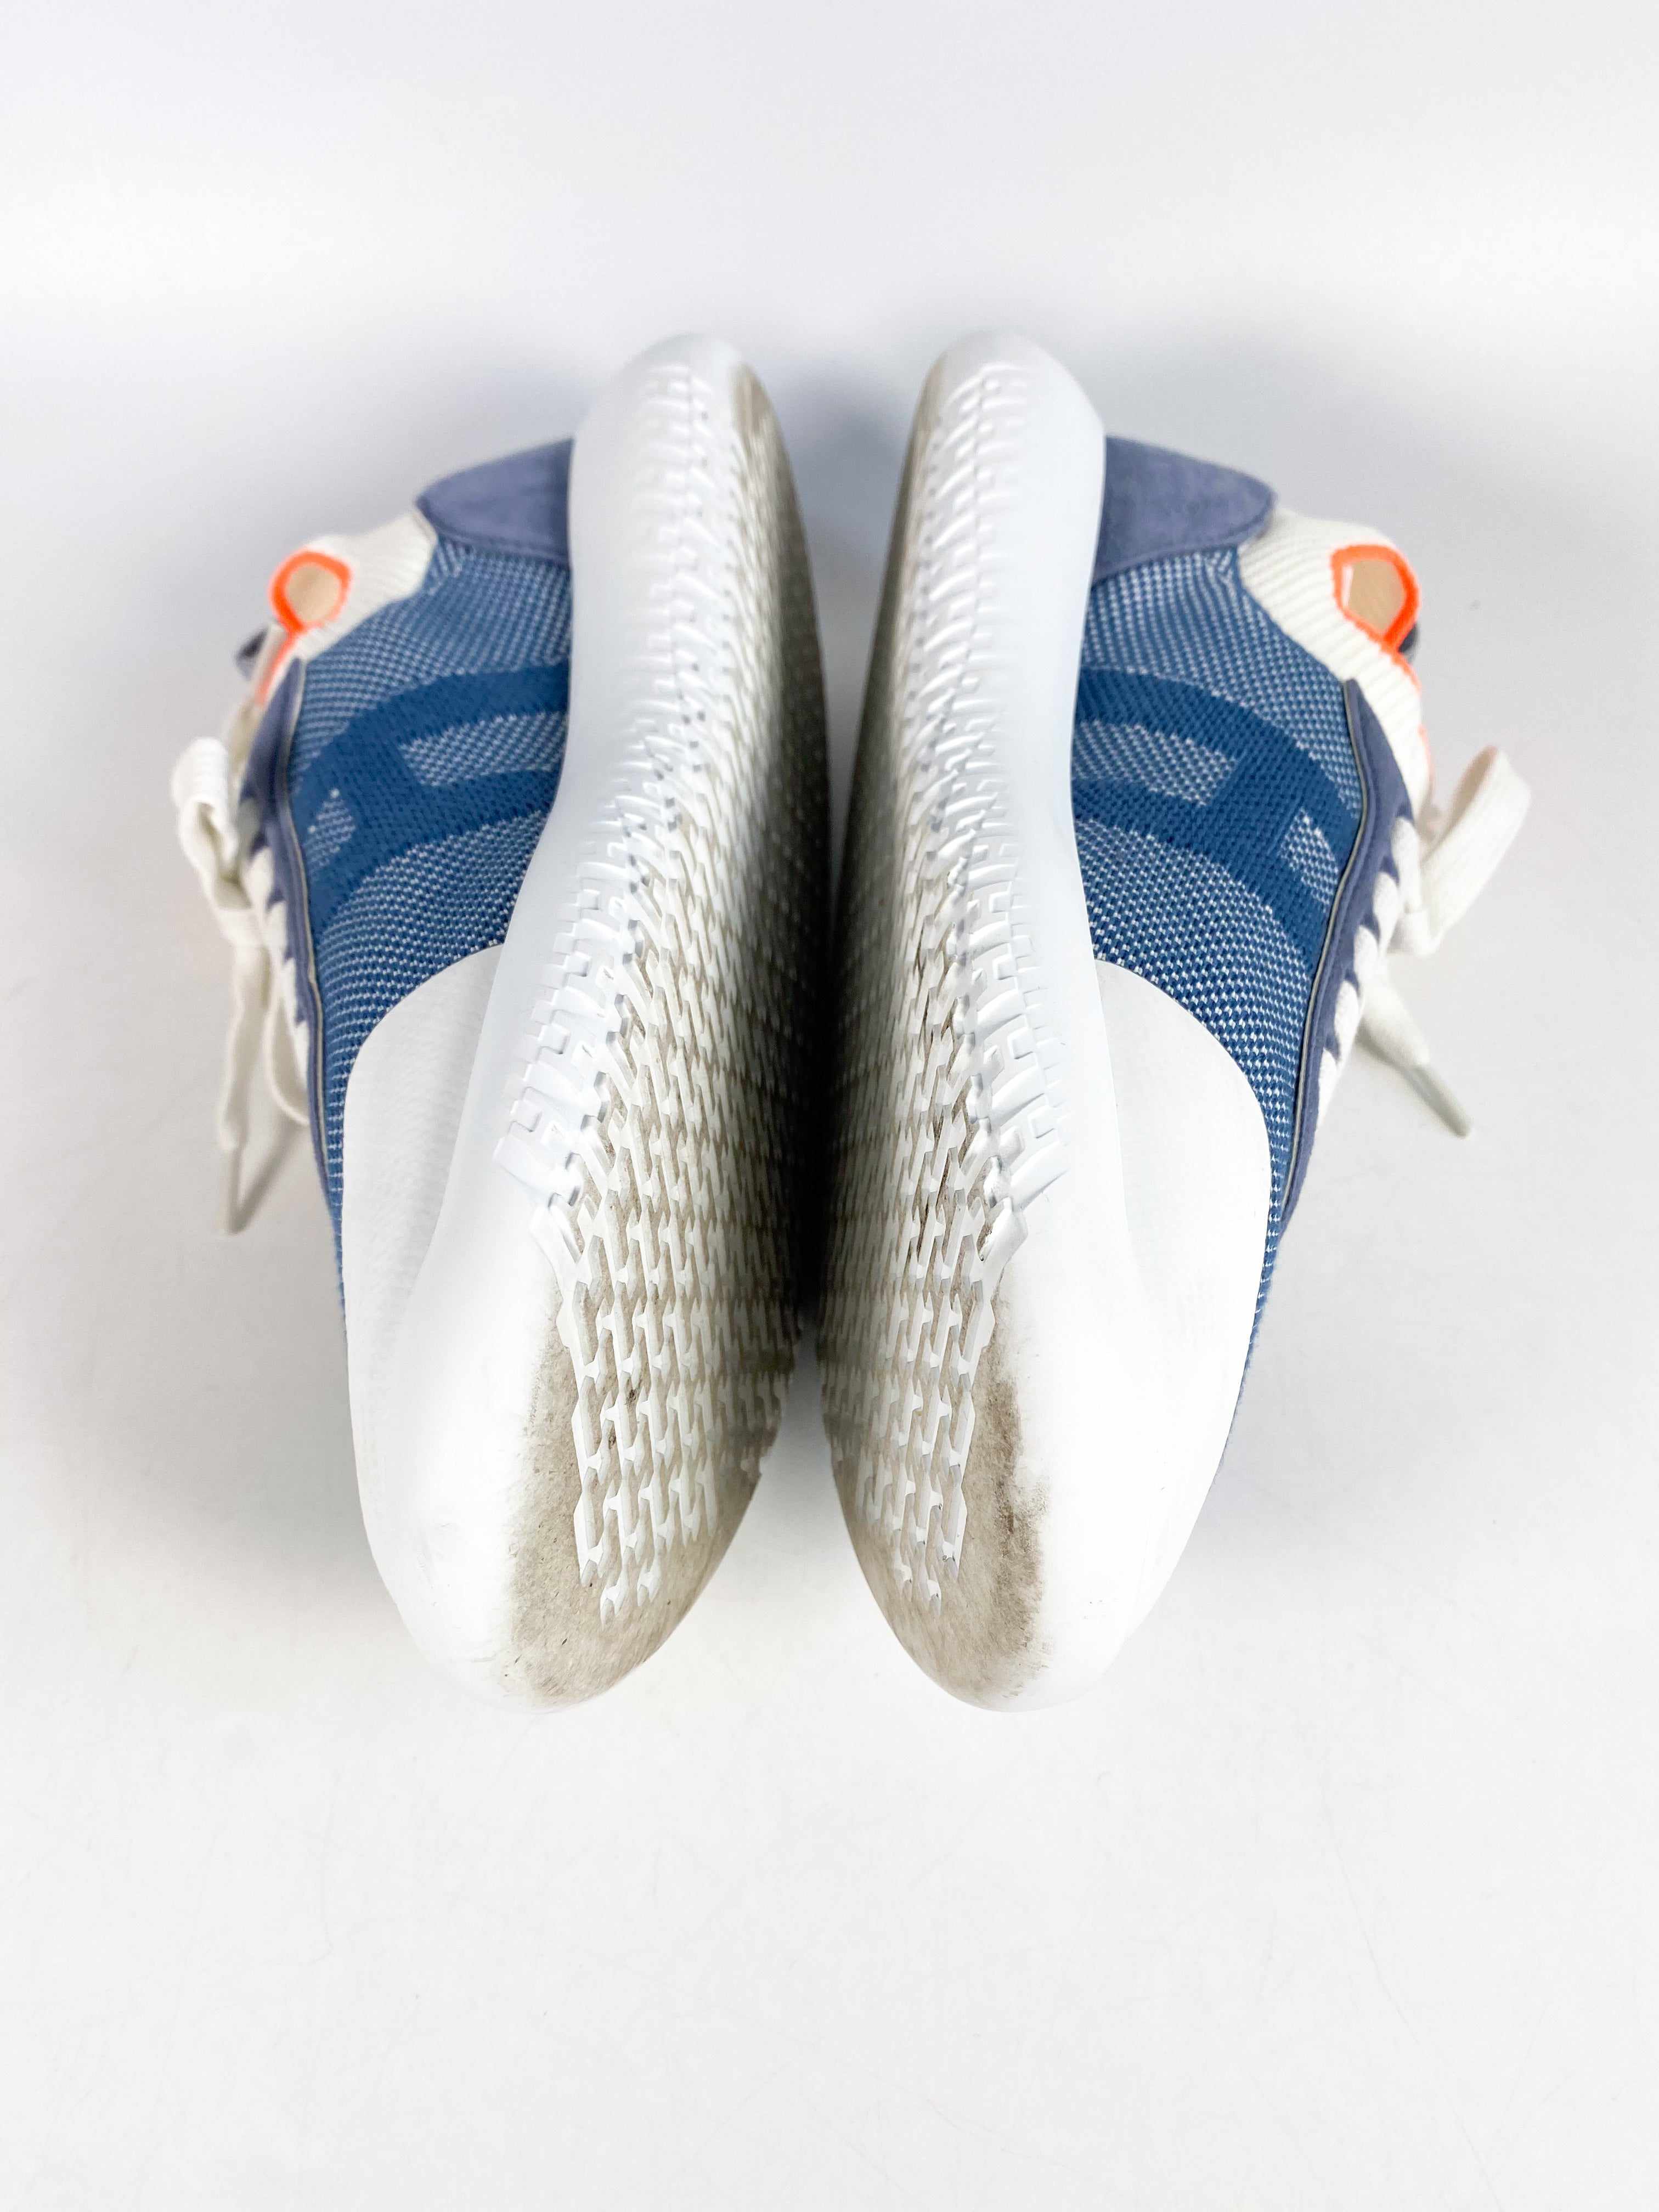 Hermes Crew Sneakers (Blue/White) Size 38.5 EU (25cm)